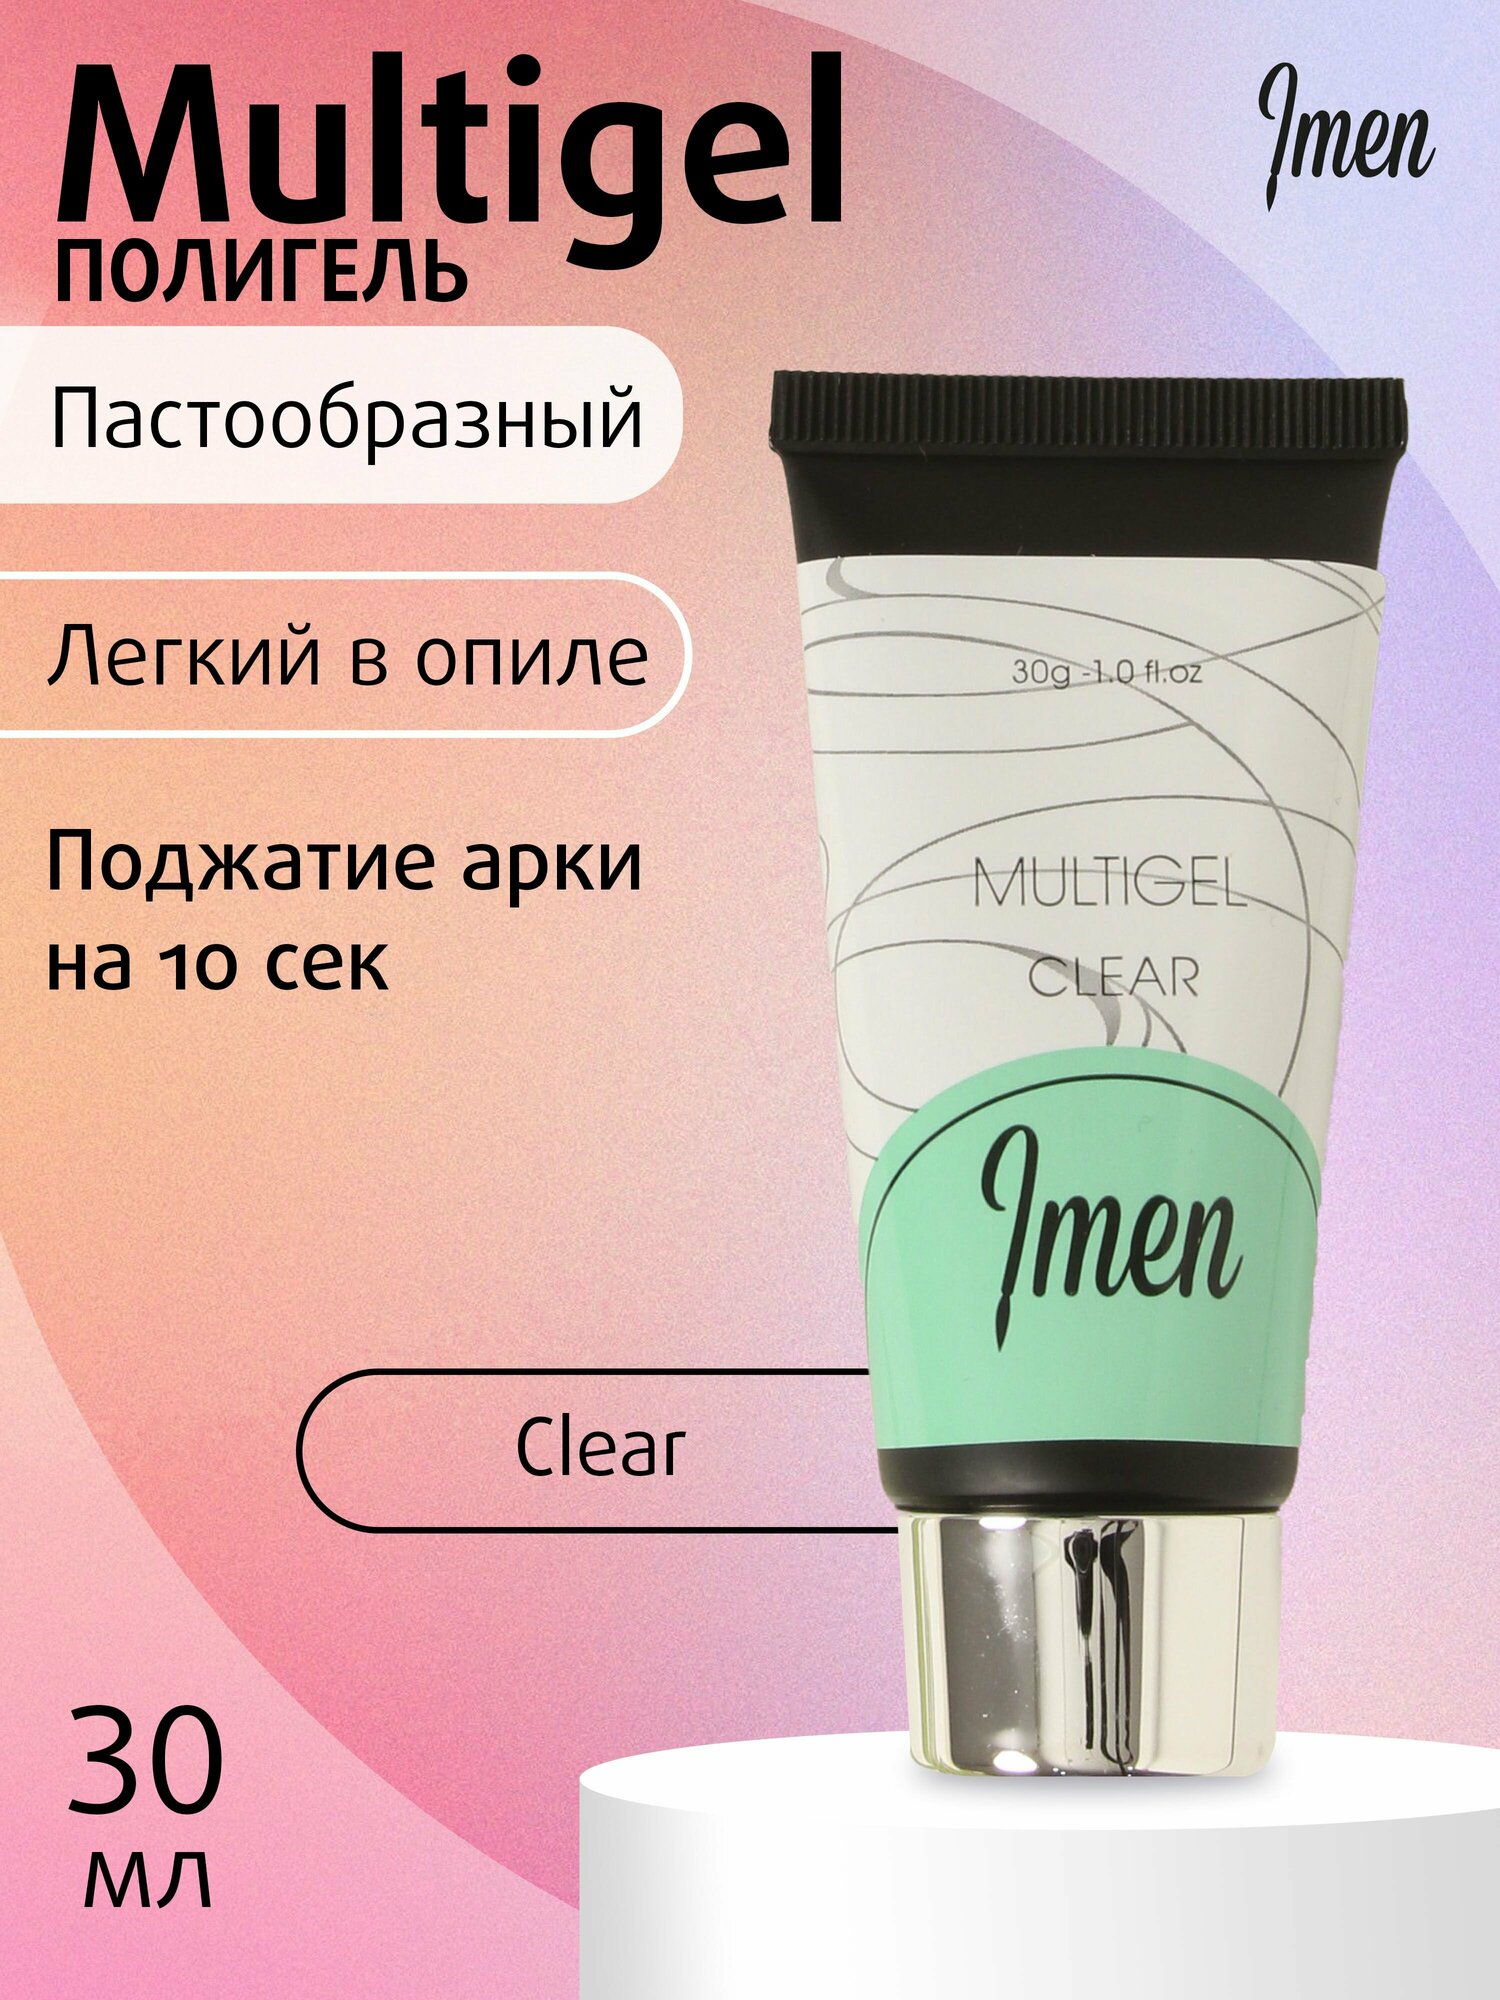 Imen multigel clear (мультигель прозрачный) , 30 ml